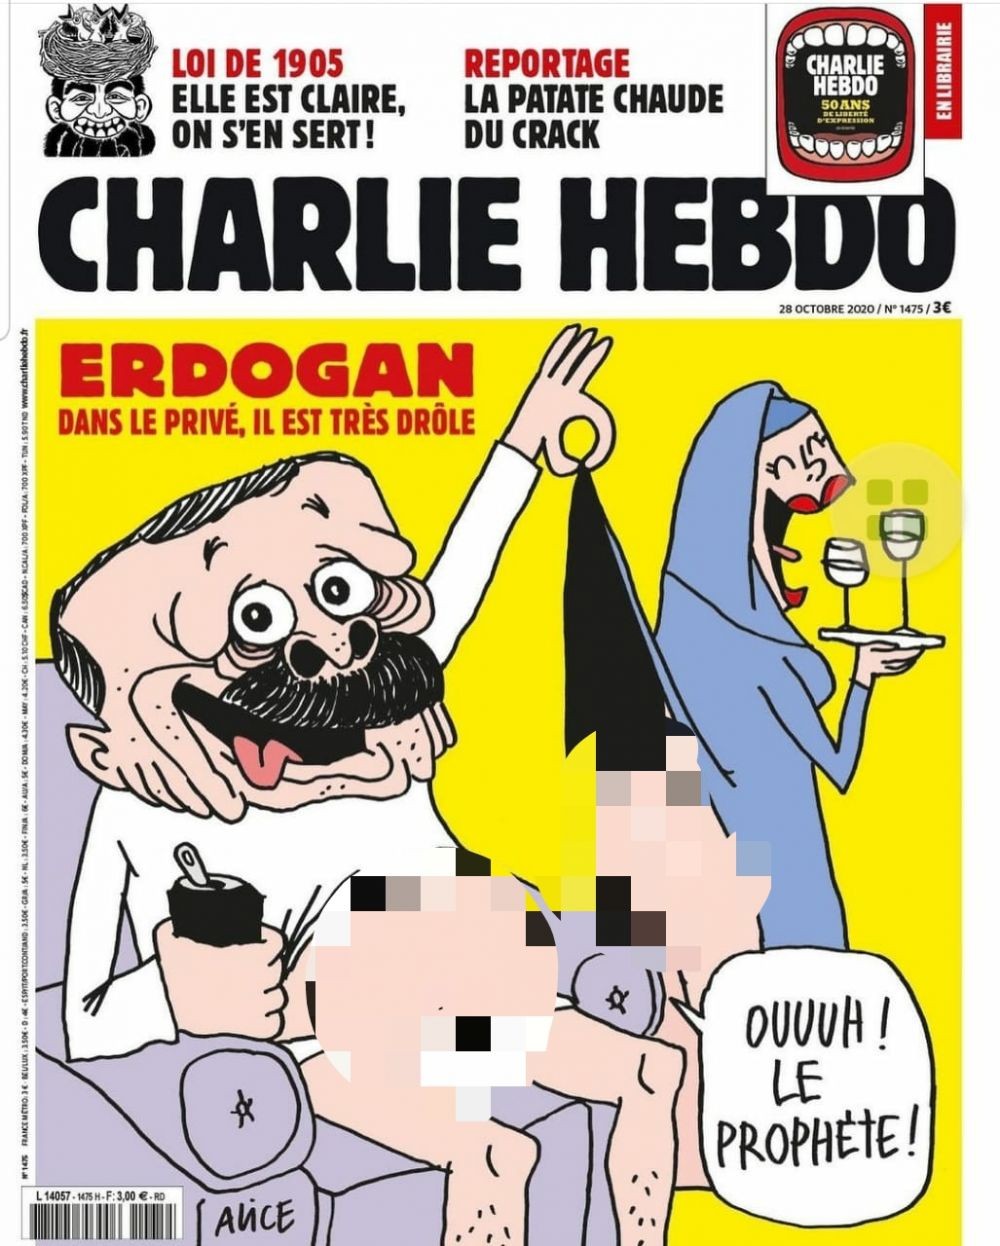 Sampul Depan Majalah Charlie Hebdo, Presiden Erdogan Jadi Olok-olok 